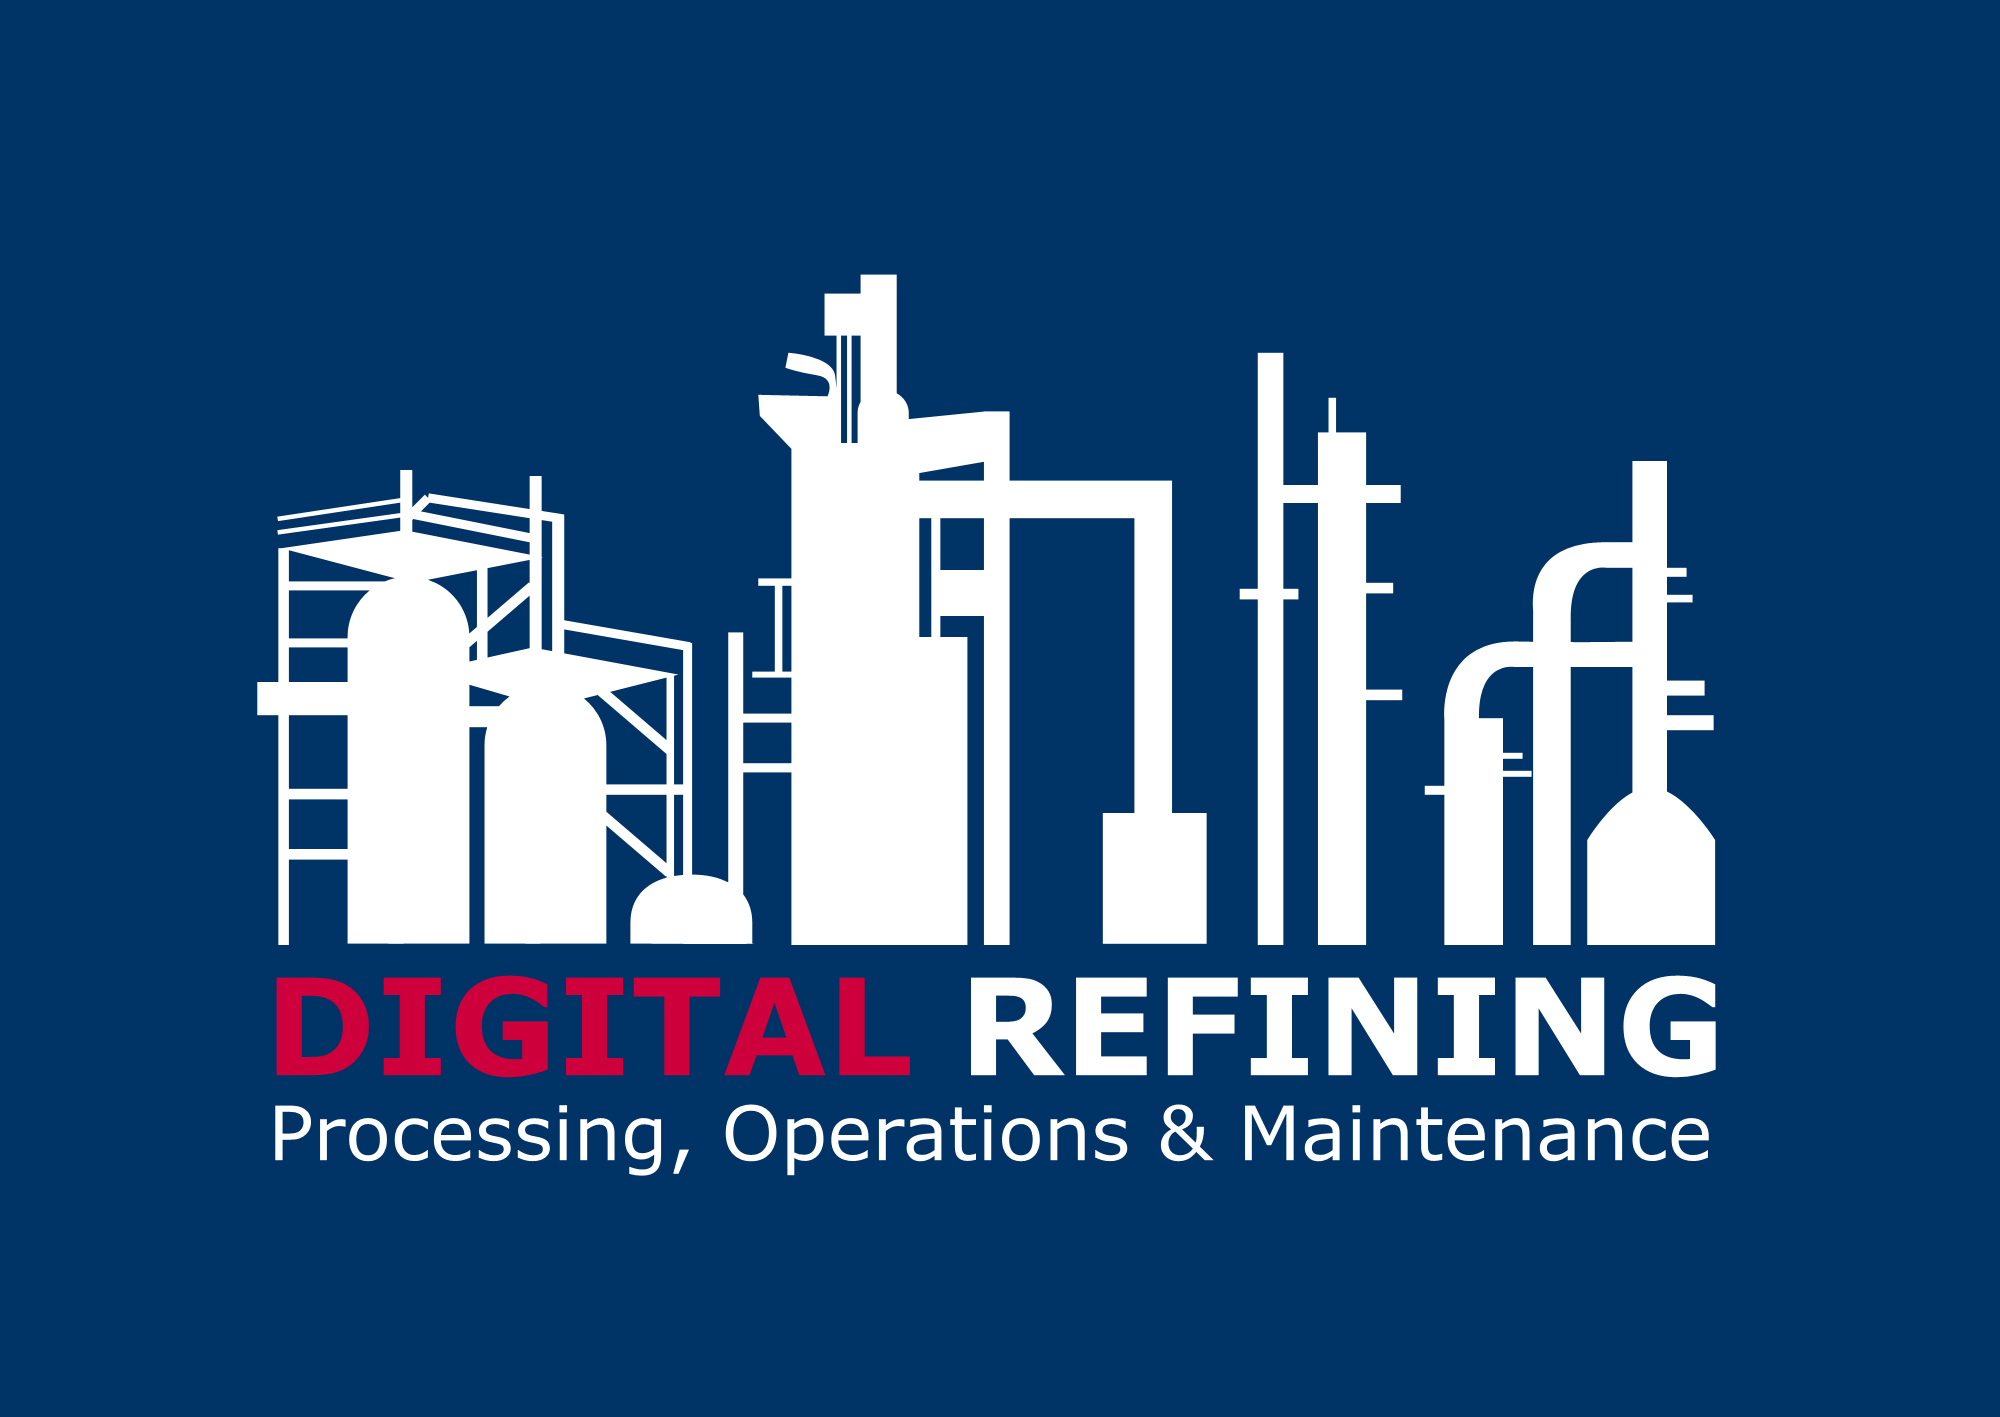 Digital Refining Processing, Operations, & Maintenance